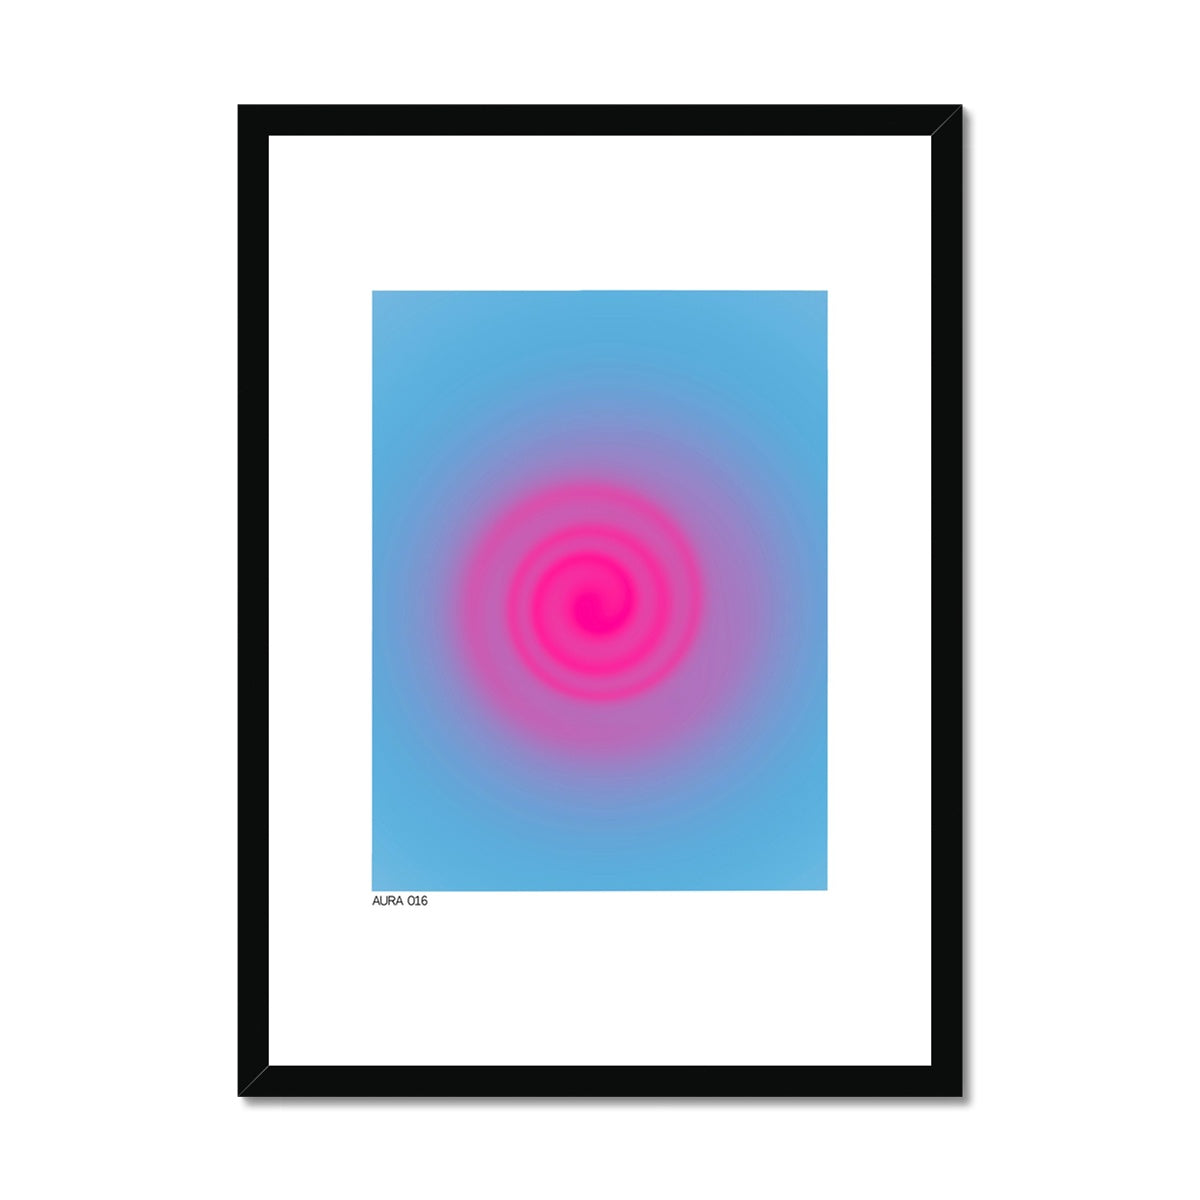 aura 016 Framed & Mounted Print